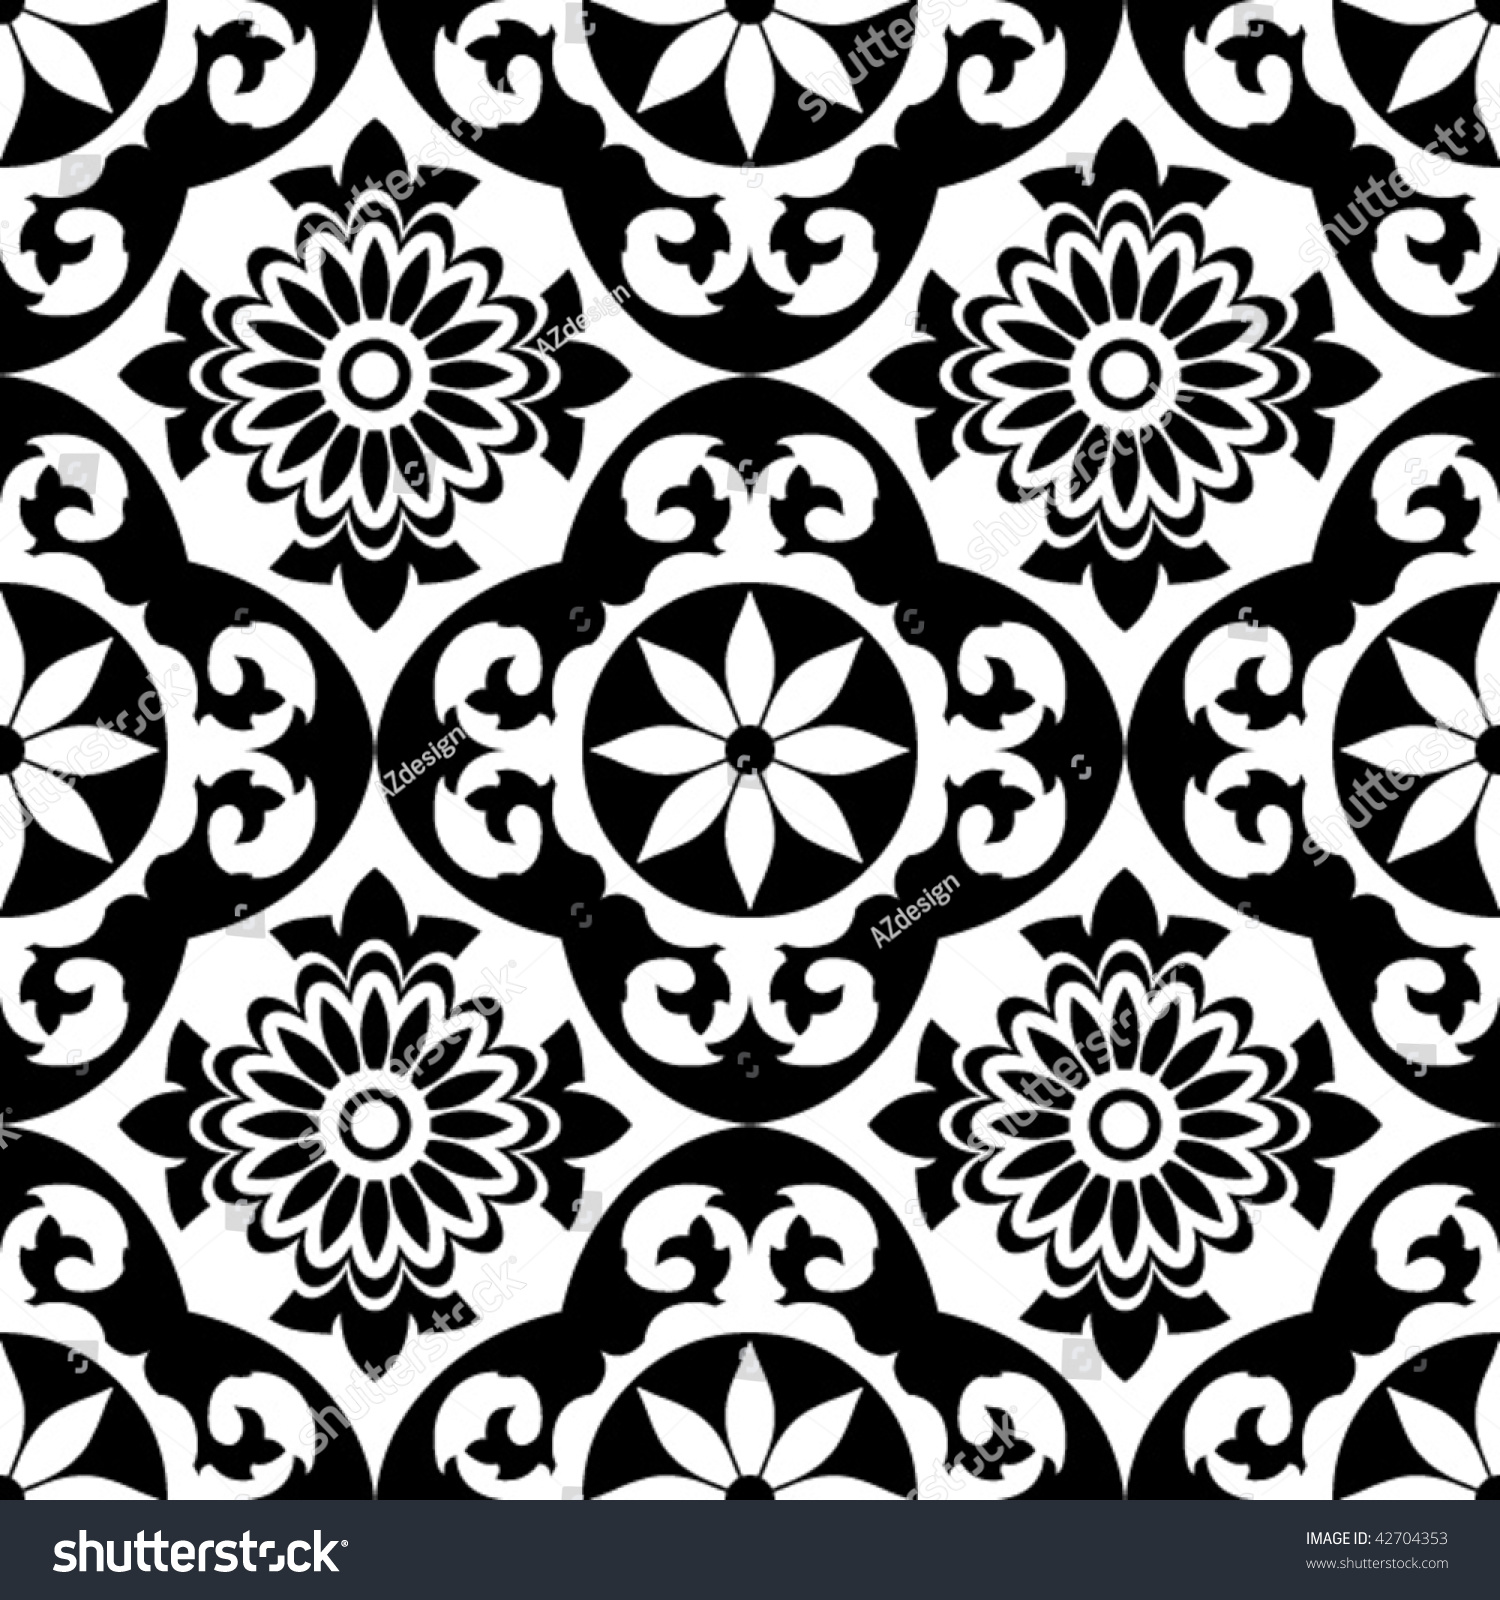 Ornate Seamless Pattern, Vector Illustration - 42704353 : Shutterstock